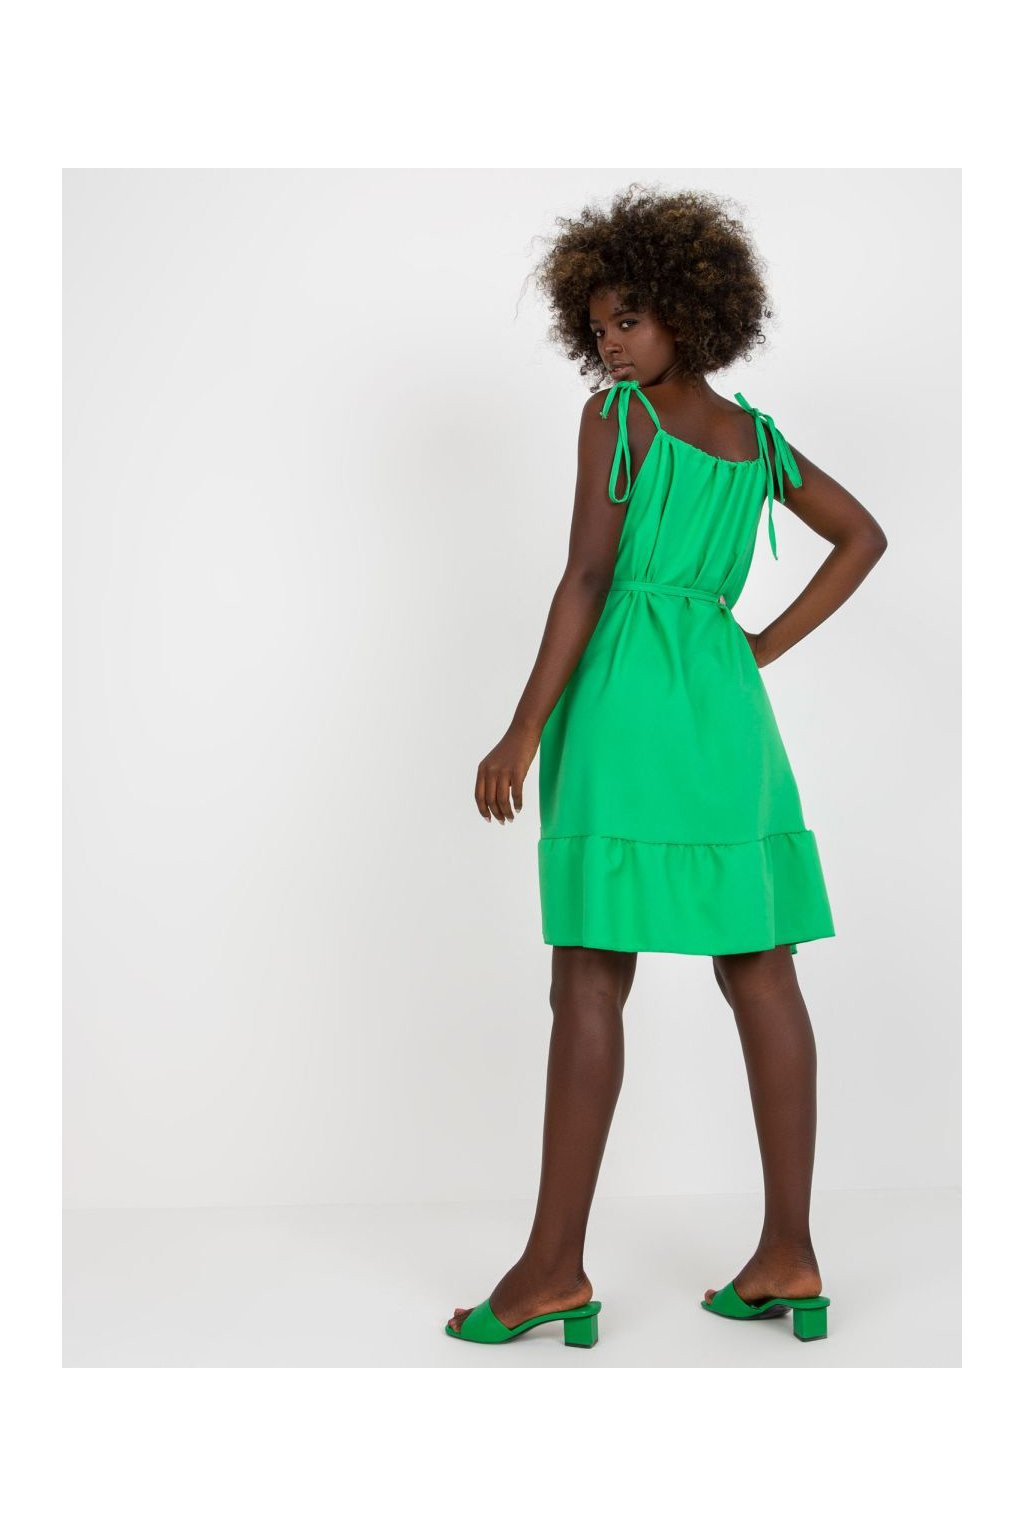 Dámské šaty WN SK 2809.06 - Rue Paris Velikost: L-XL, Barvy: Zelená